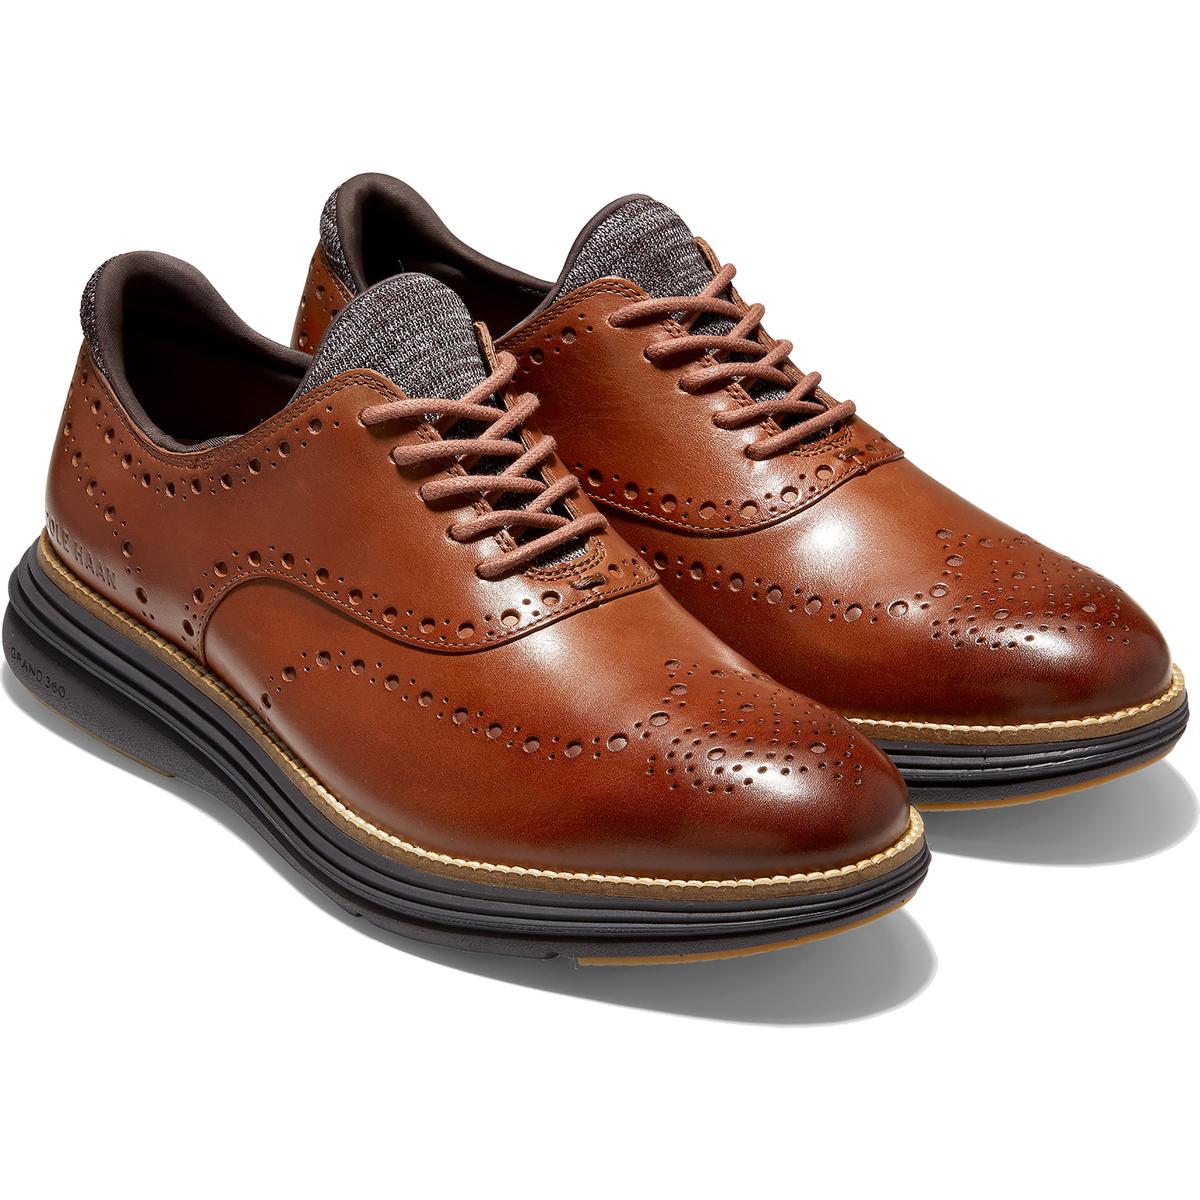 Cole Haan Mens OriginalGrand Brown Leather Oxfords Shoes 13 Medium D BHFO 5056 eBay